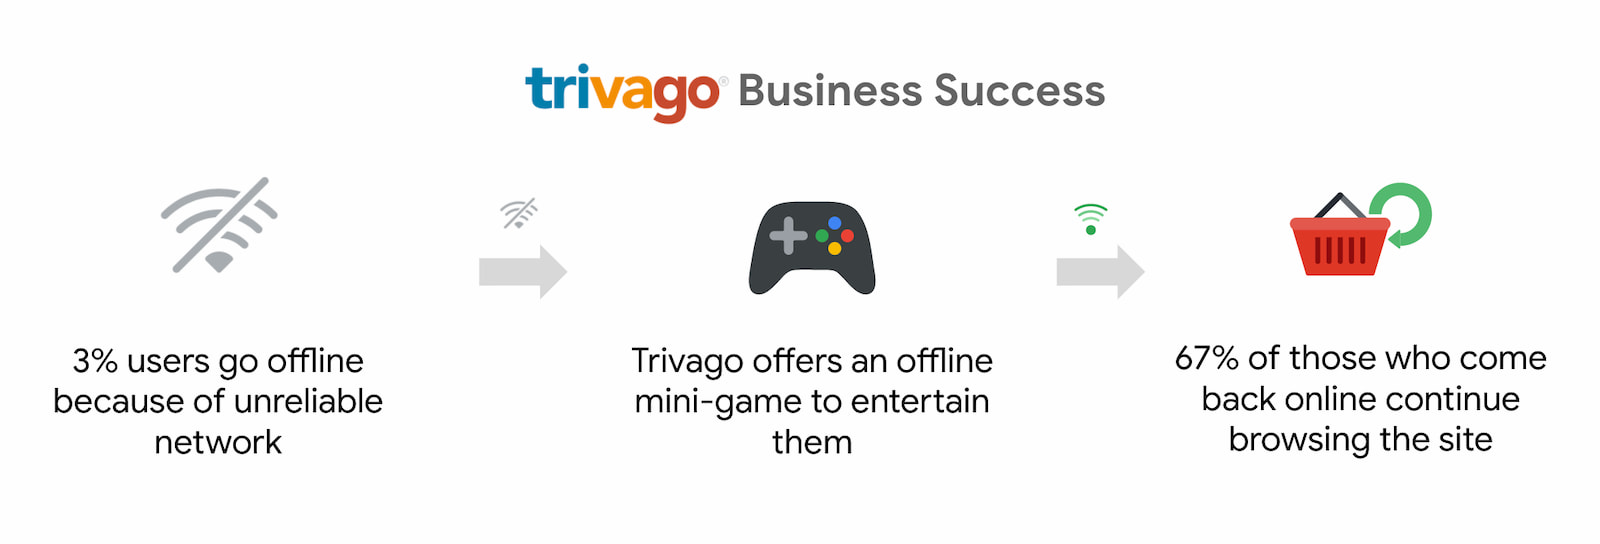 Trivago شاهد افزایش 67 درصدی کاربرانی بود که دوباره آنلاین شدند و به مرور ادامه دادند.